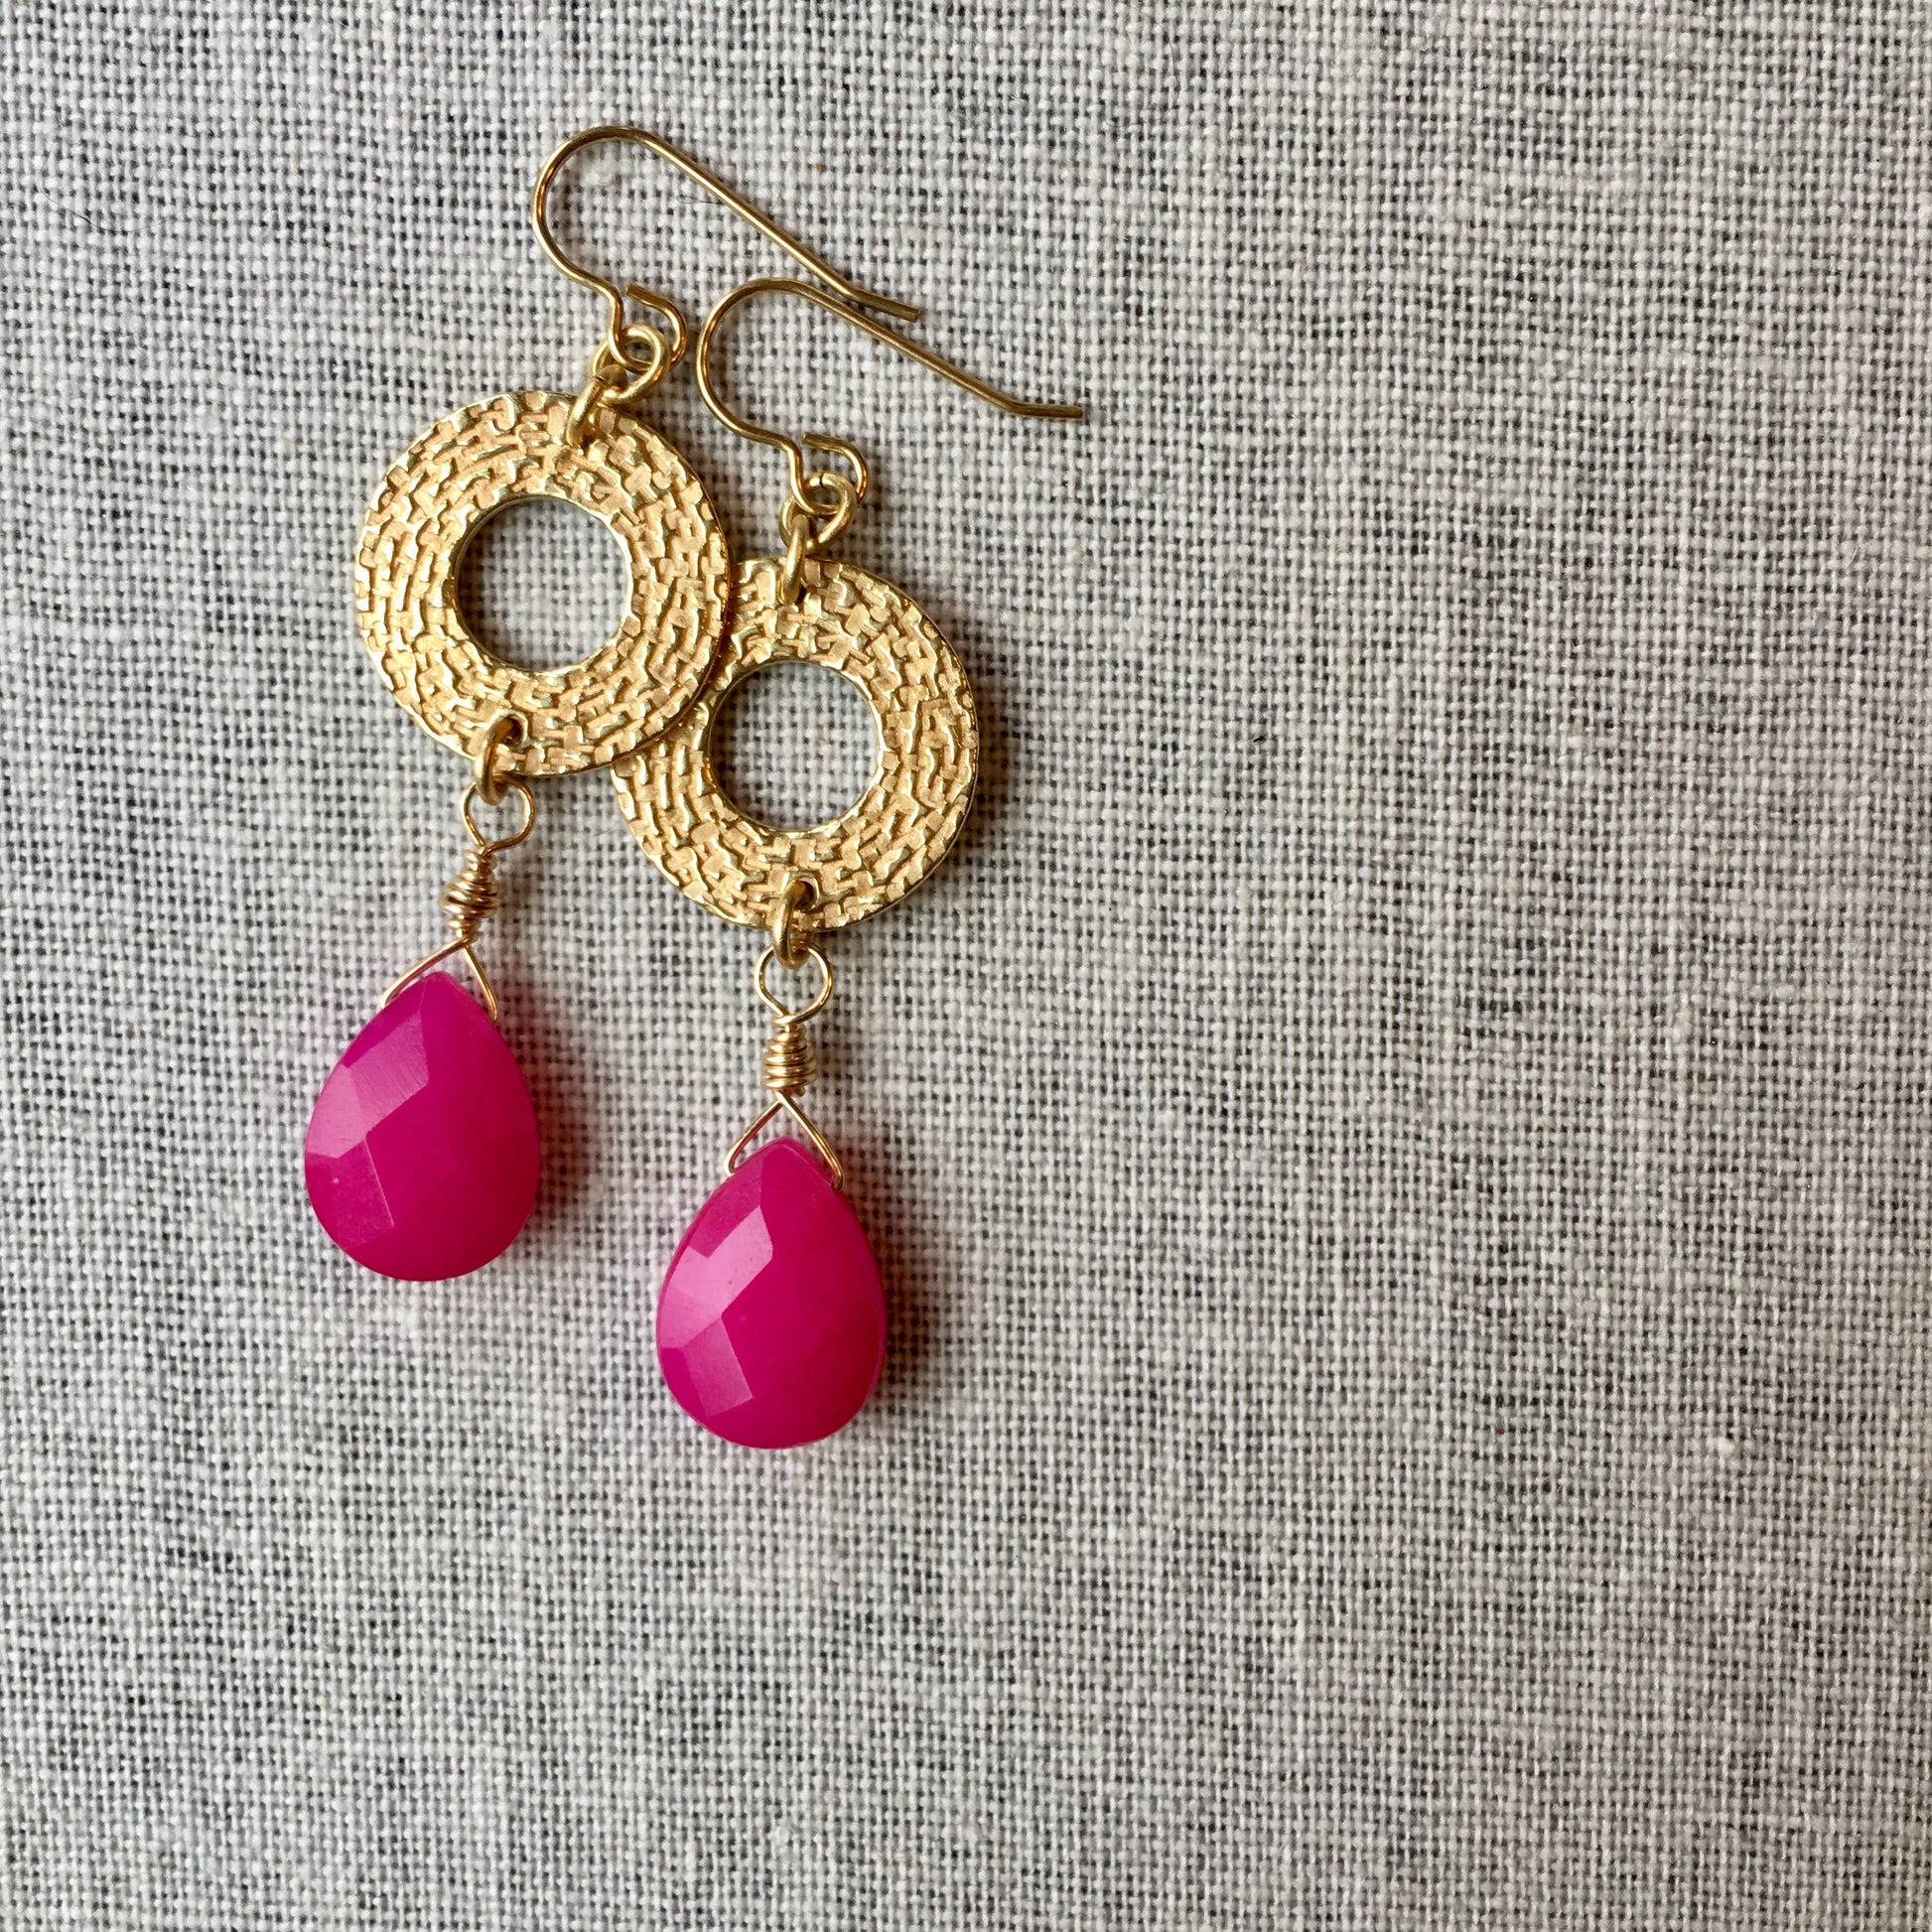 Fuchsia Jade and Brass Statement Earrings by Wallis Designs